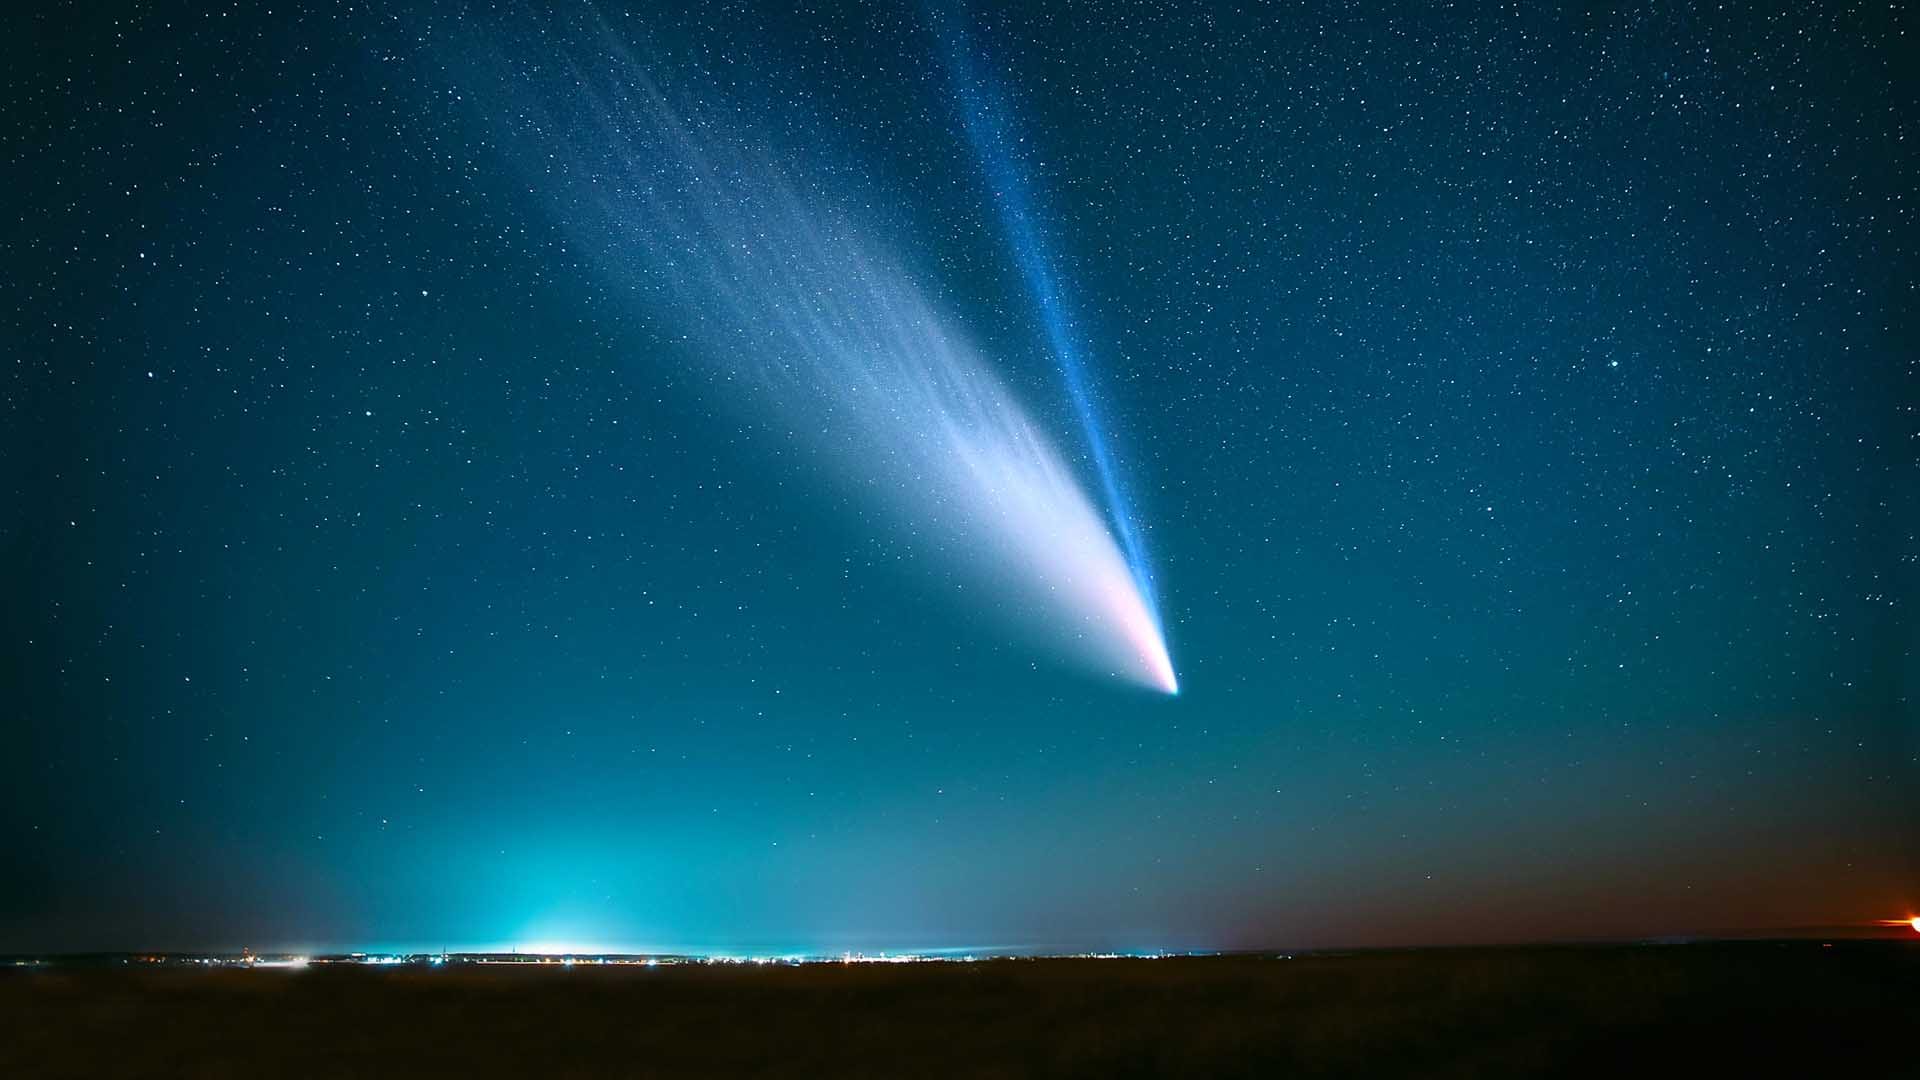 Great comets